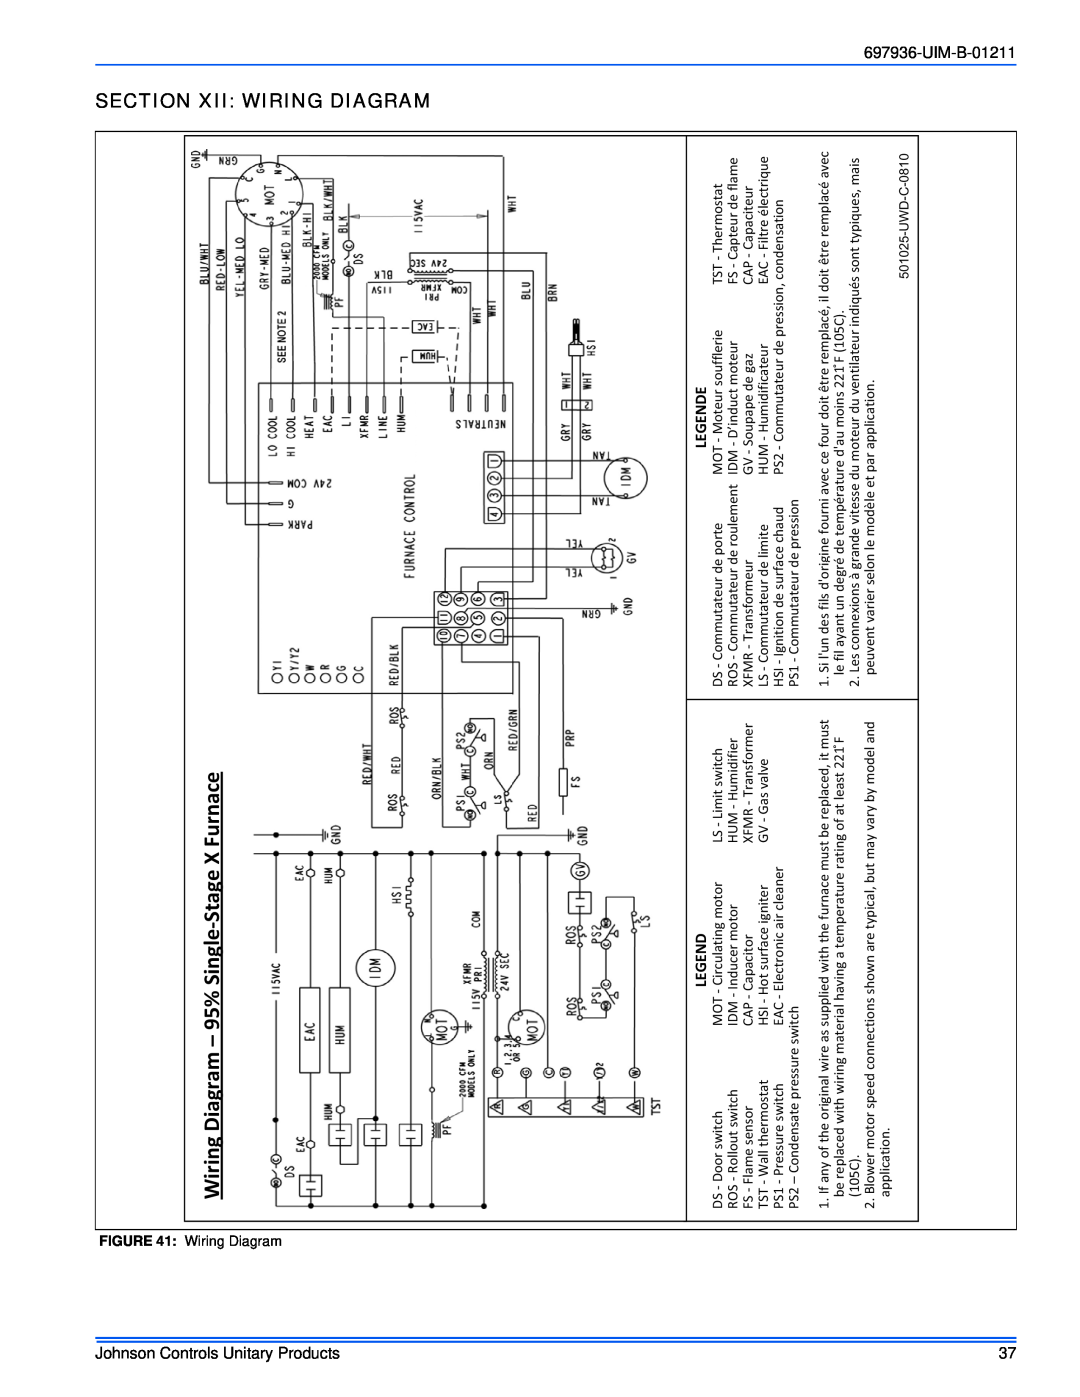 Johnson Controls TM9X*MP Furnace, Section Xii Wiring Diagram, Johnson Controls Unitary Products, Legende, UIM-B-01211 